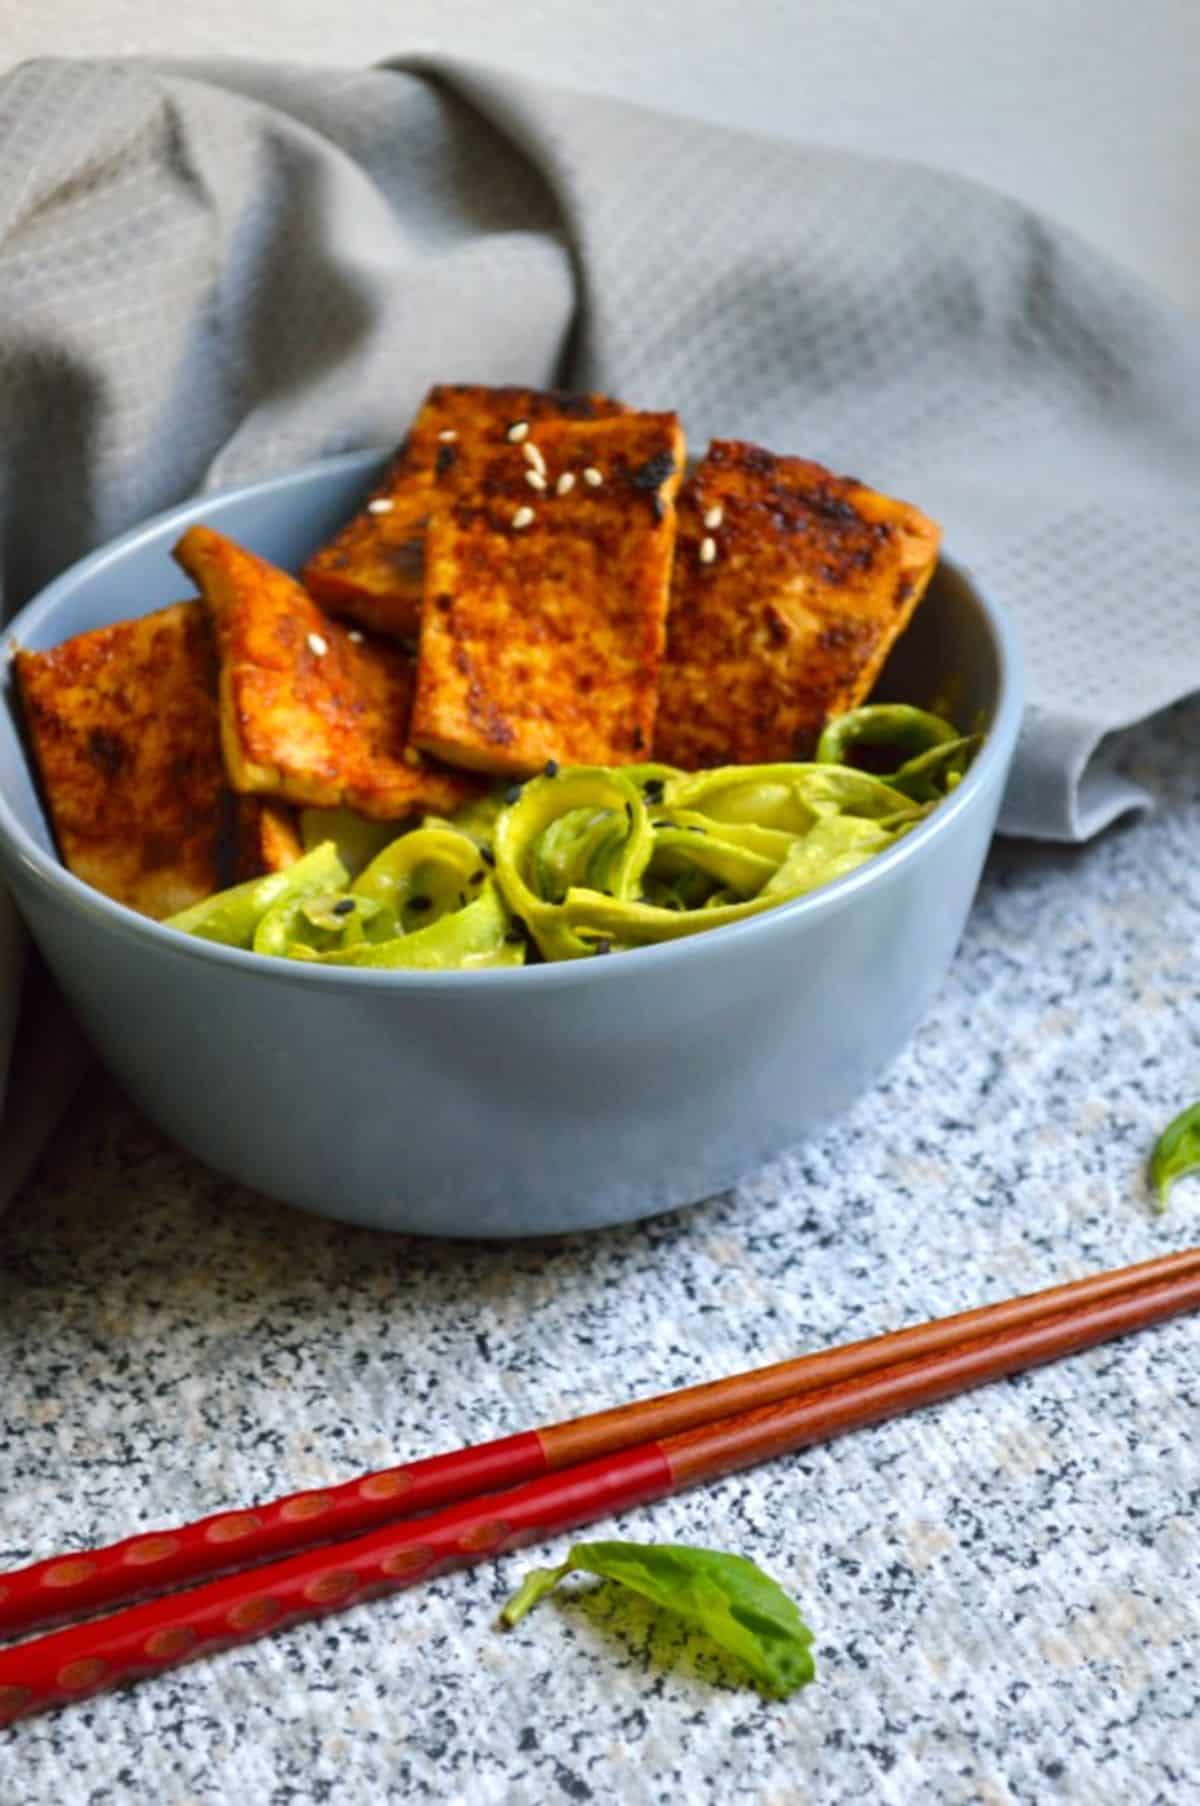 Pan-Fried Sesame Garlic Tofu in a blue bowl.